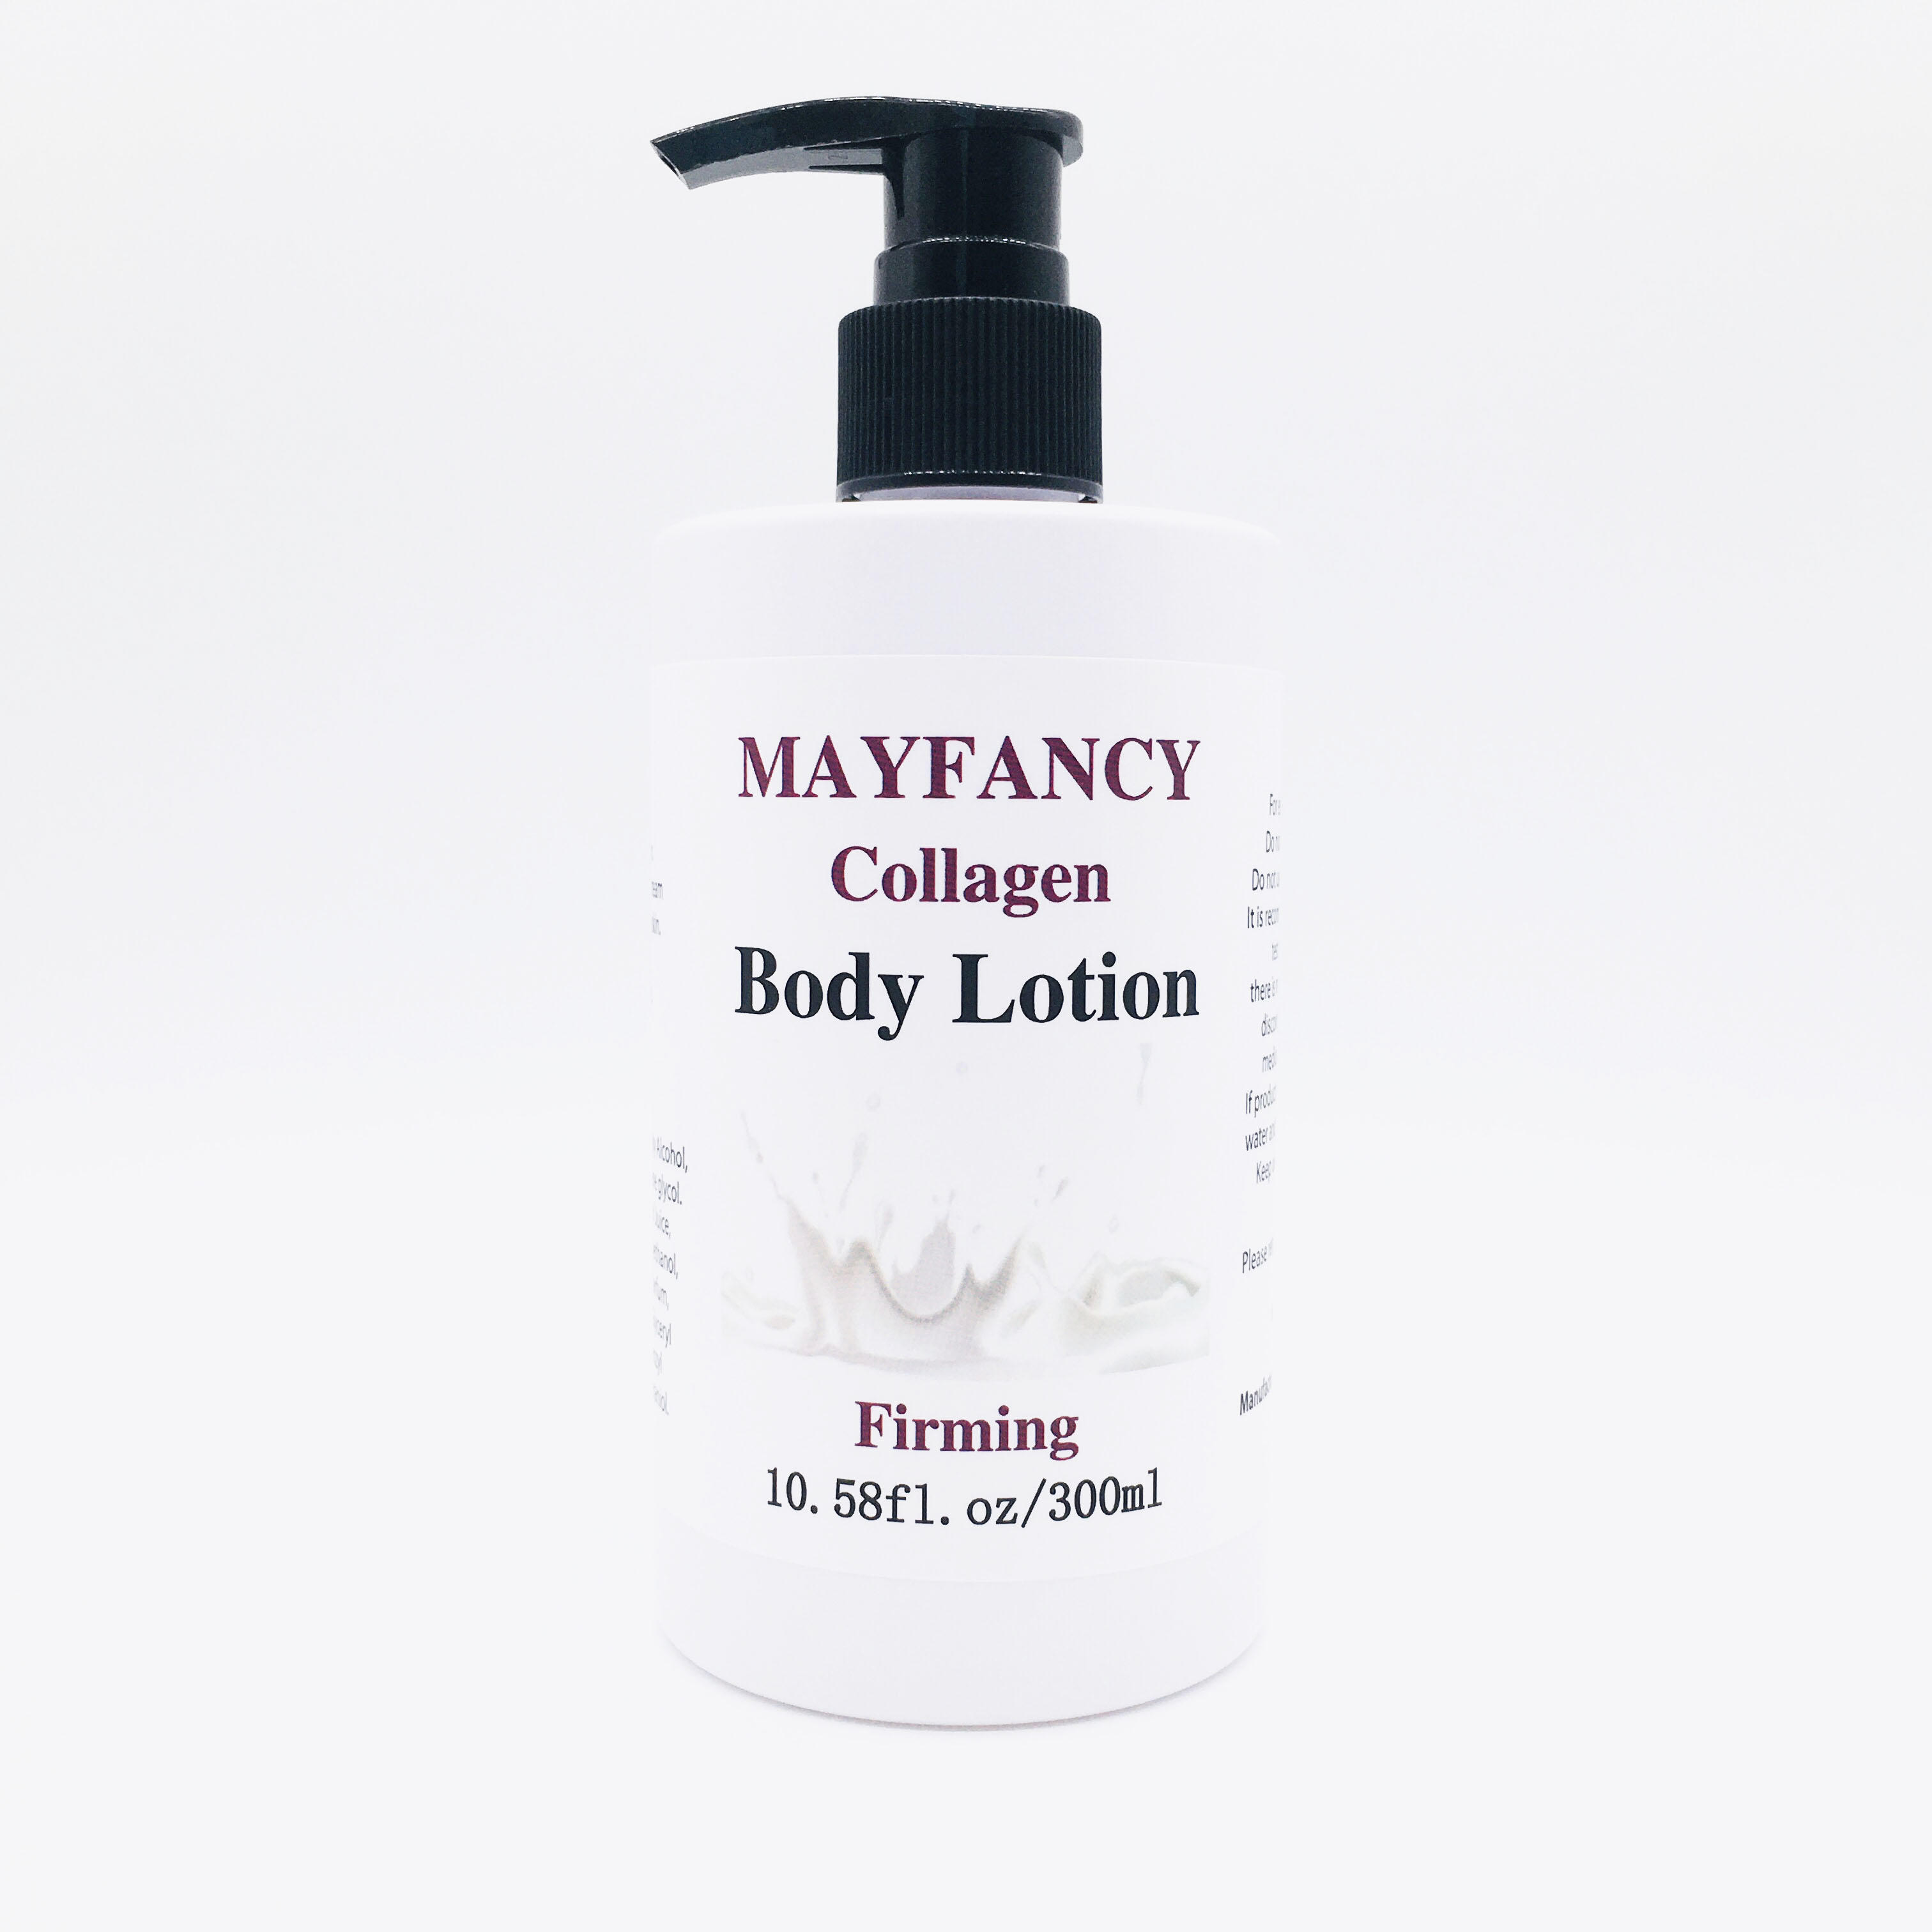 Mayfancy Collagen Body Lotion